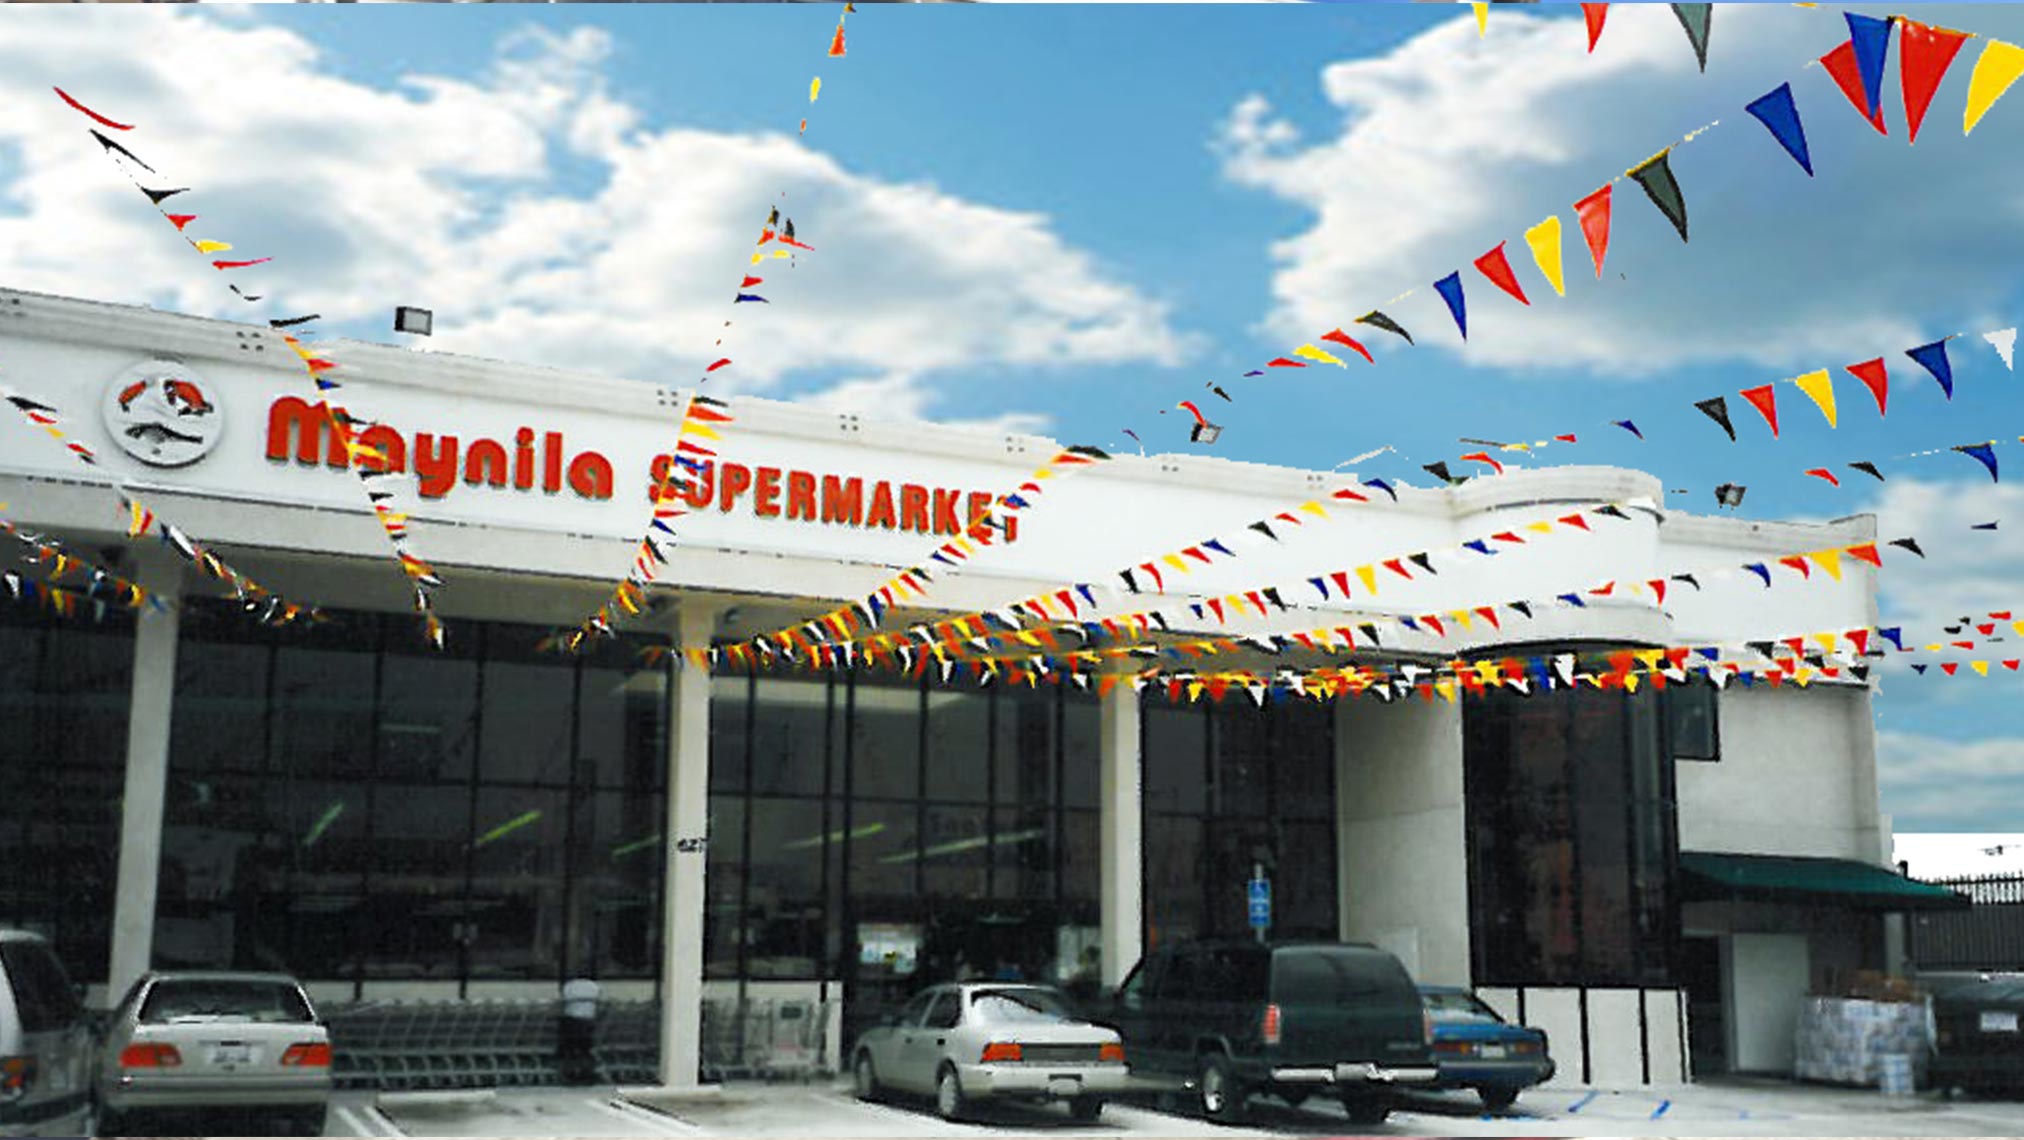 Maynila Supermarket